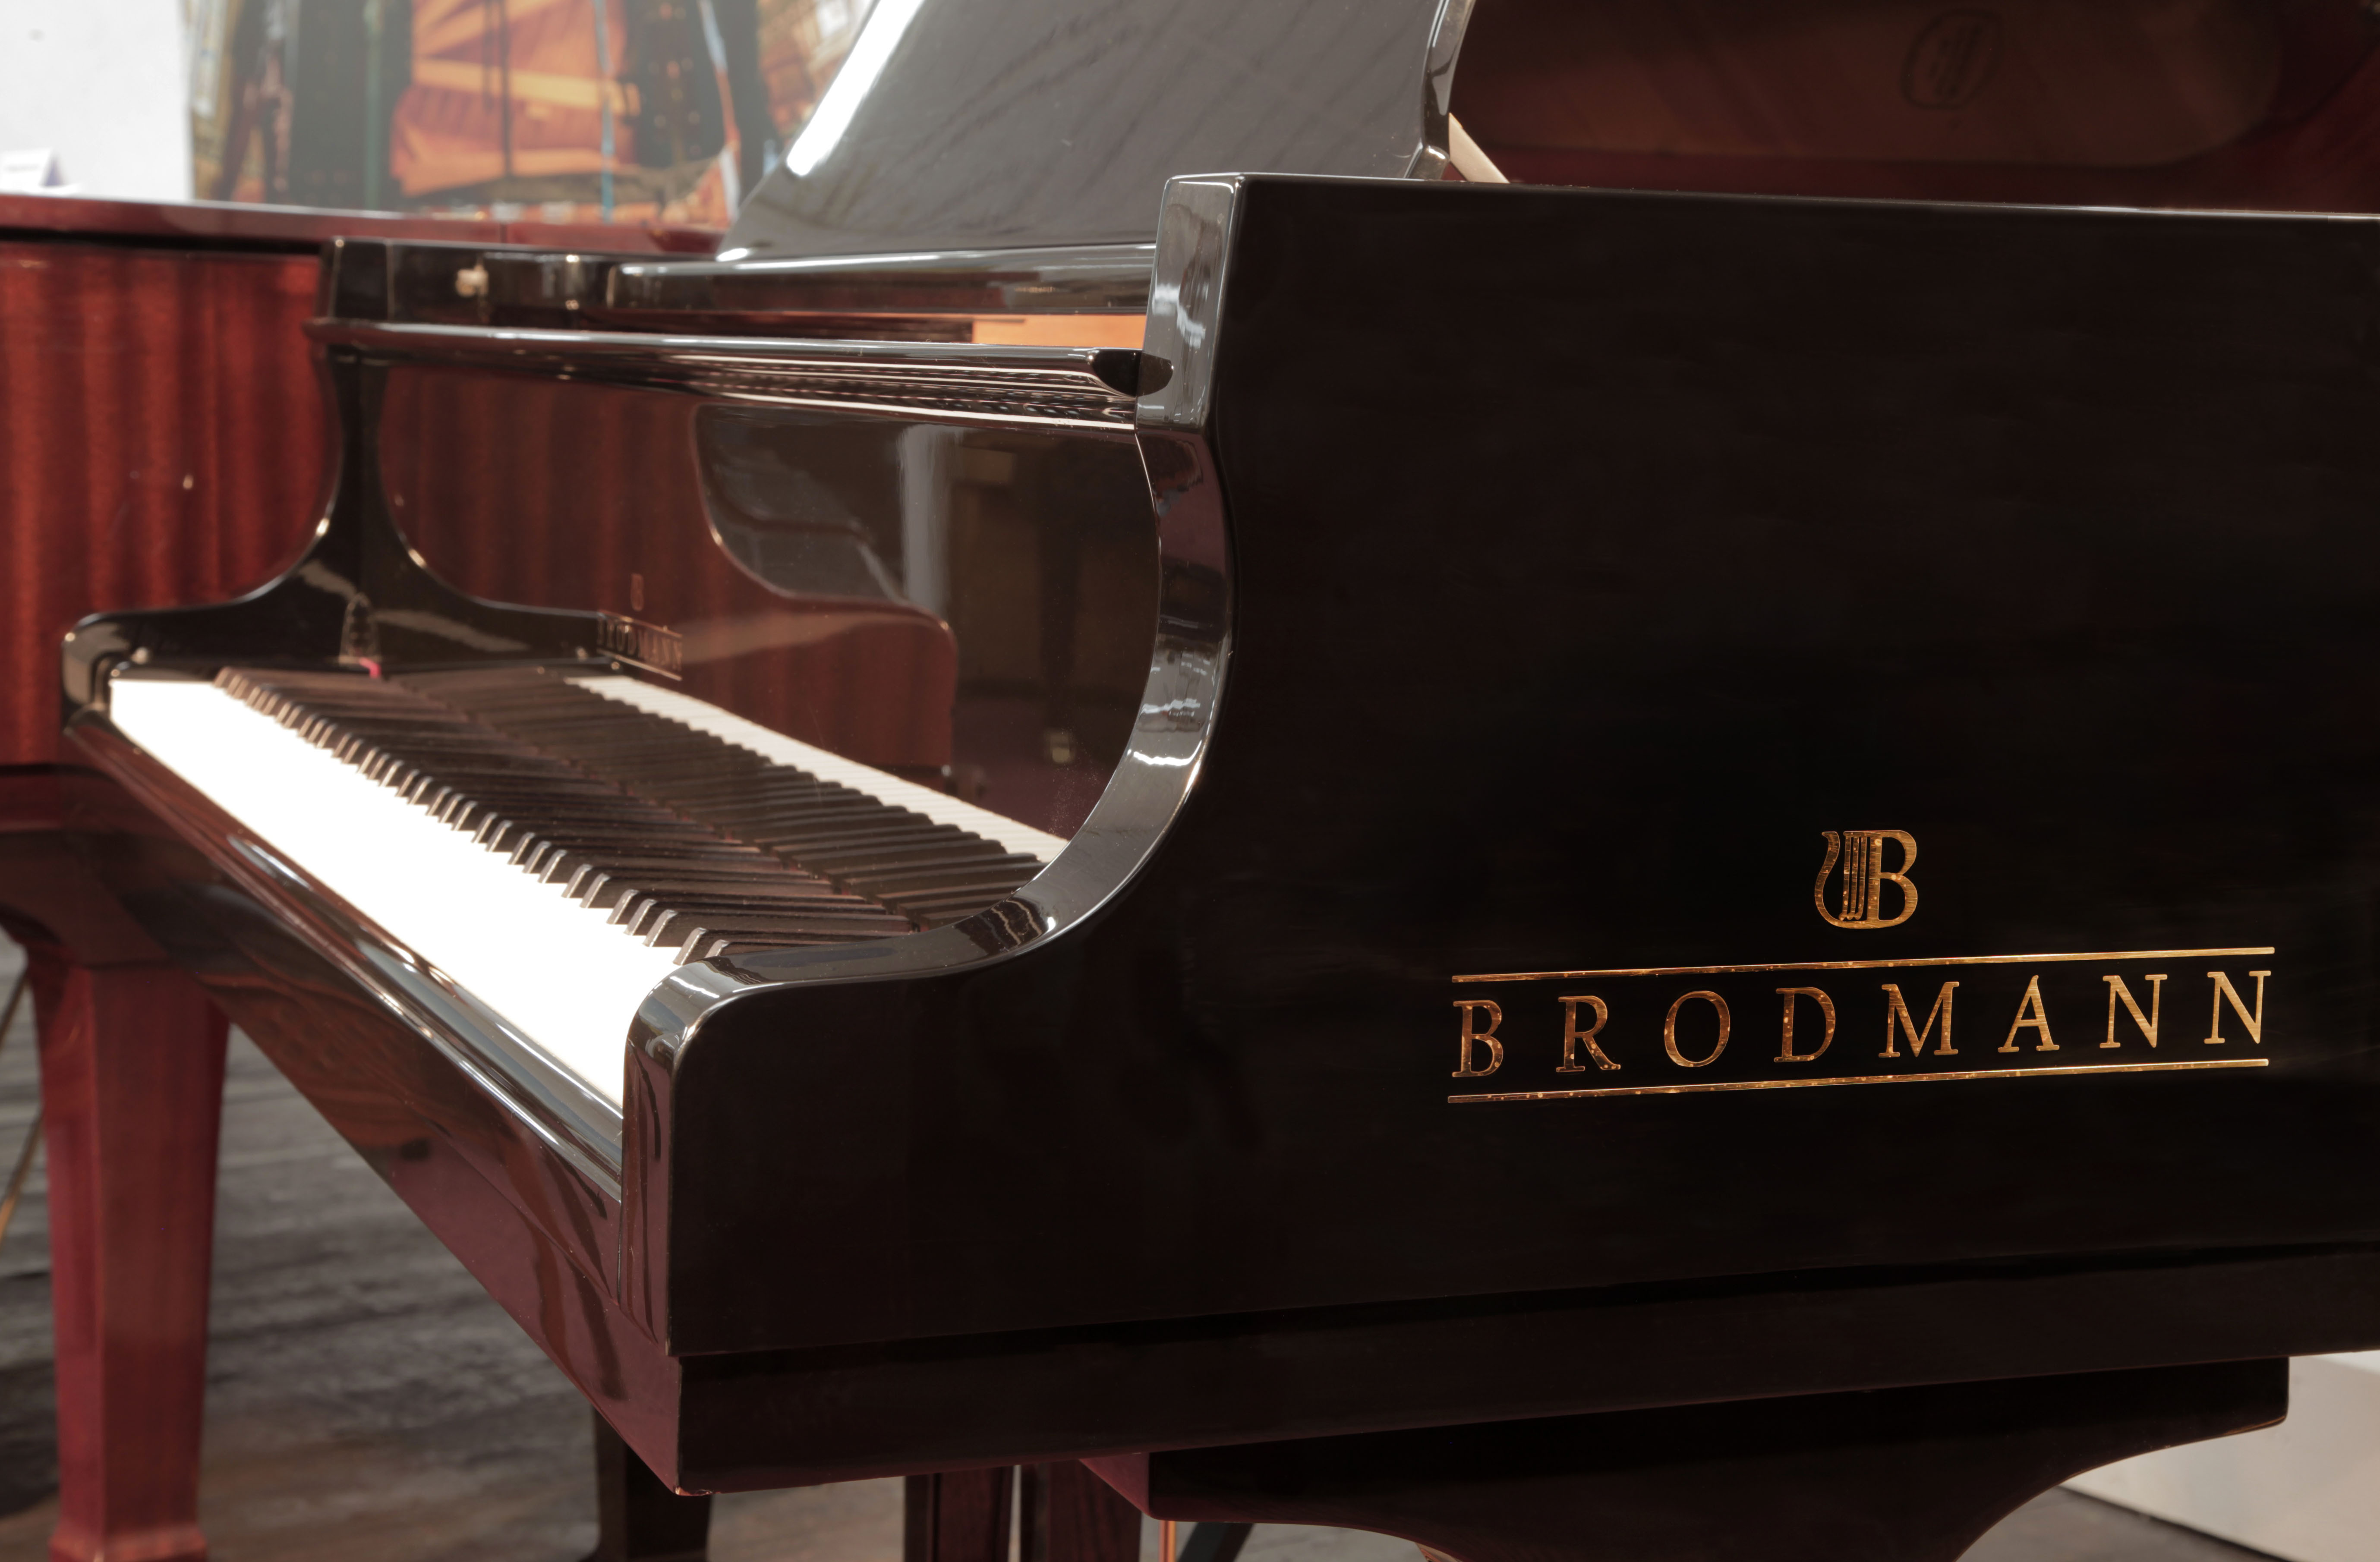 Brodmann BG-187 piano cheek detail